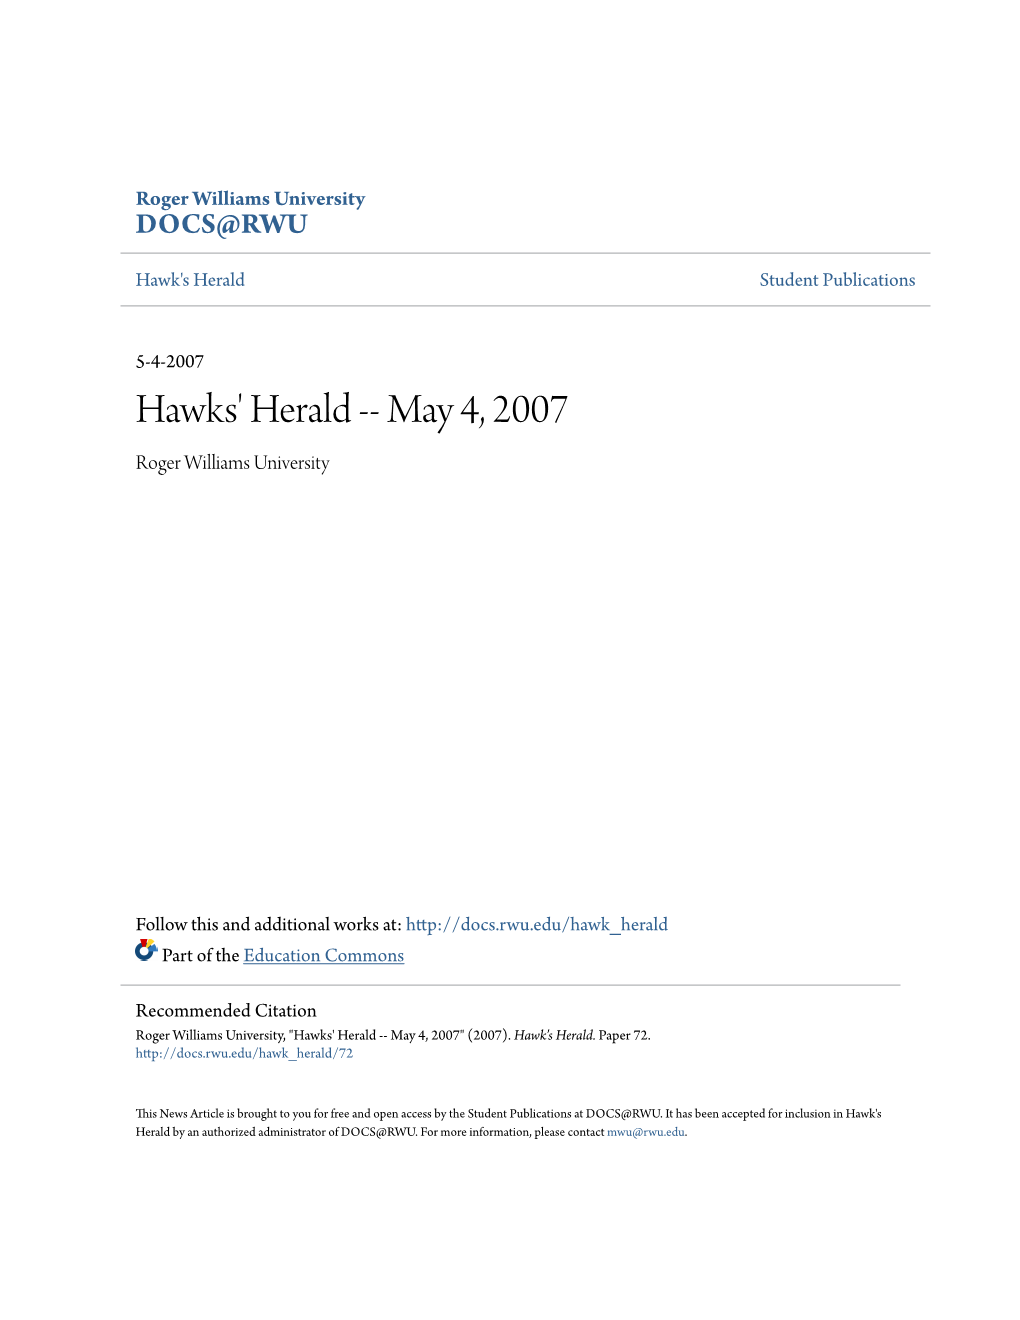 Hawks' Herald -- May 4, 2007 Roger Williams University